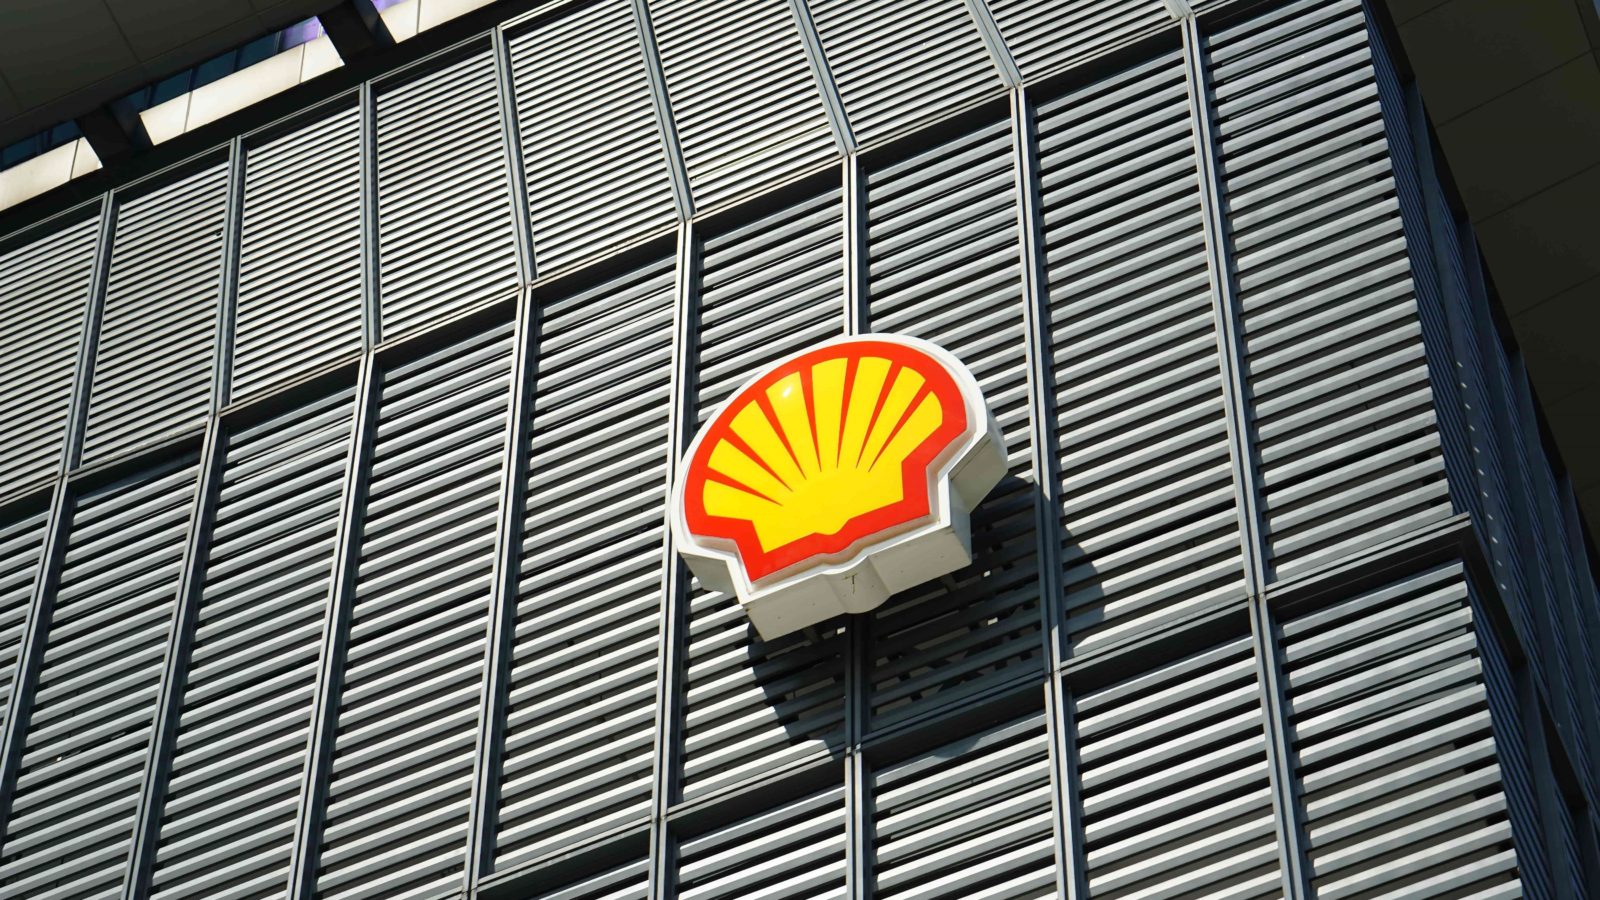 Strong progress towards net zero for Shell